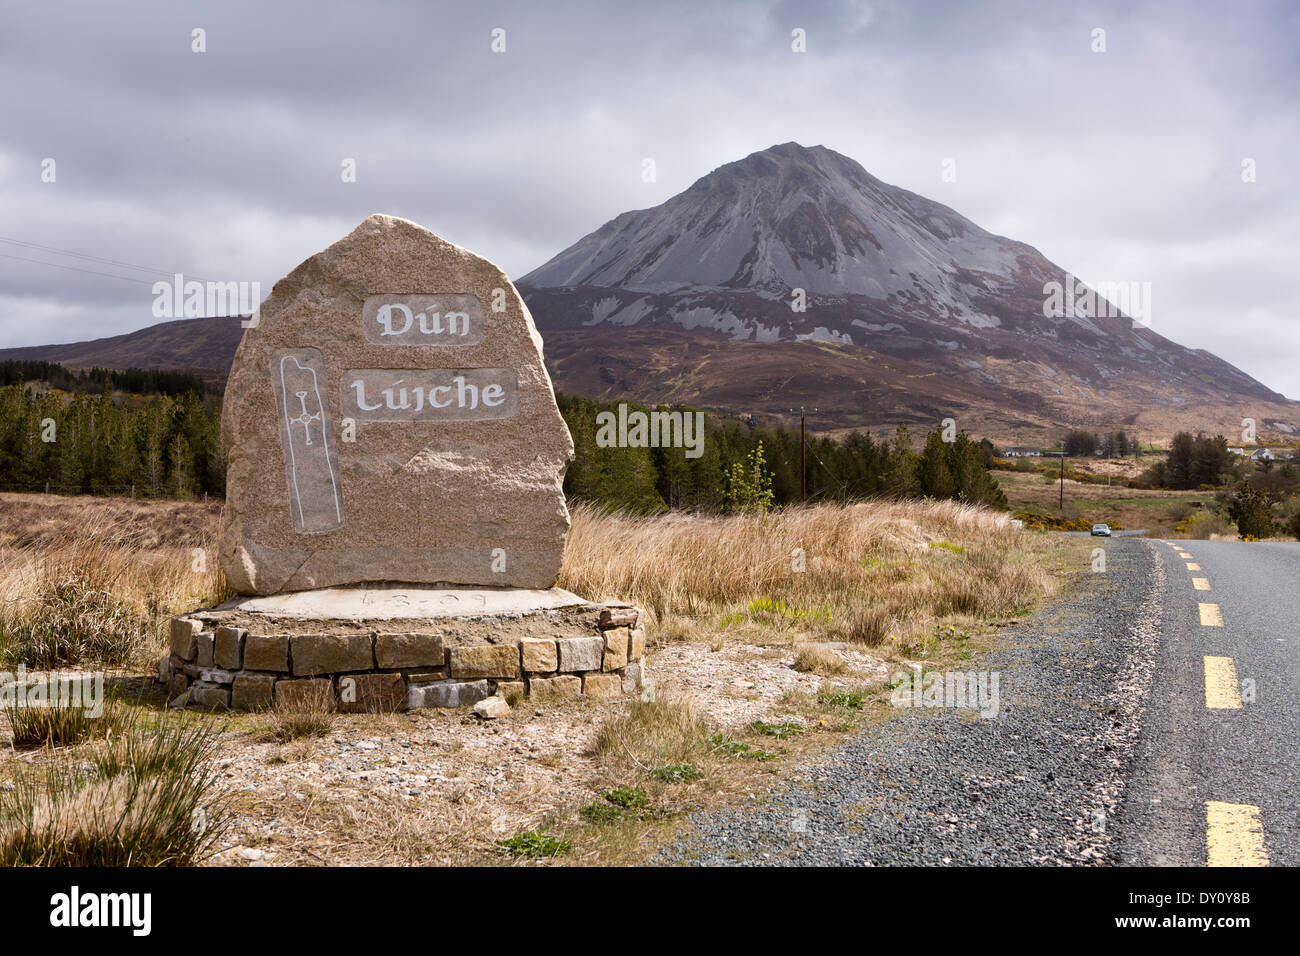 Irlanda, Co Donegal, Dunlewey, Mount Errigal, Irlanda la seconda montagna più alta, Dun Luiche lingua irlandese segno Foto Stock